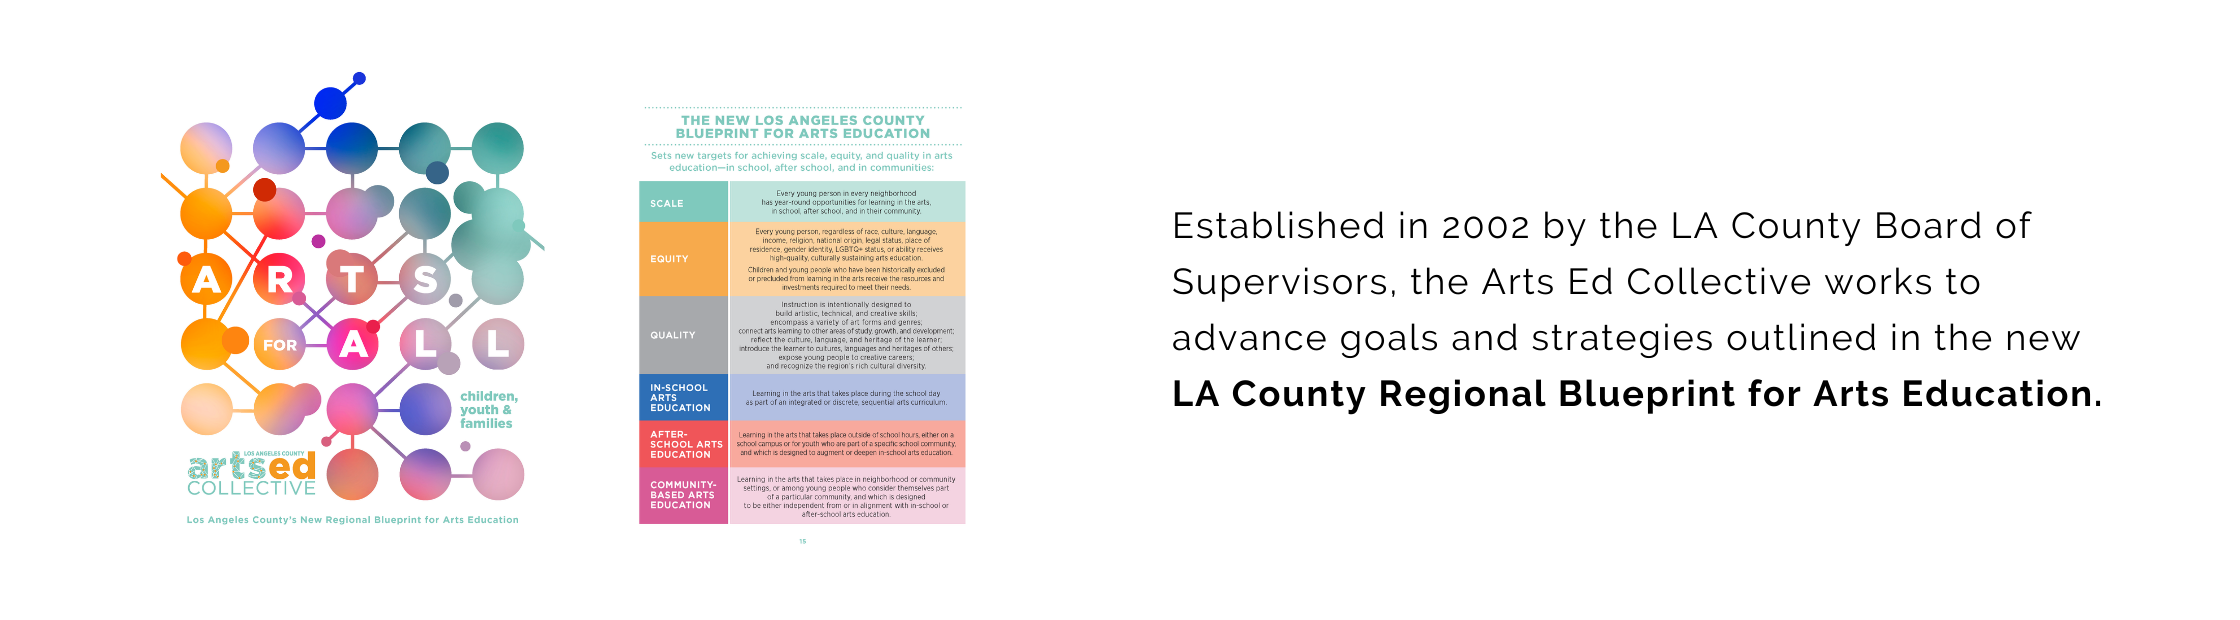 LA County Regional Blueprint for Arts Education